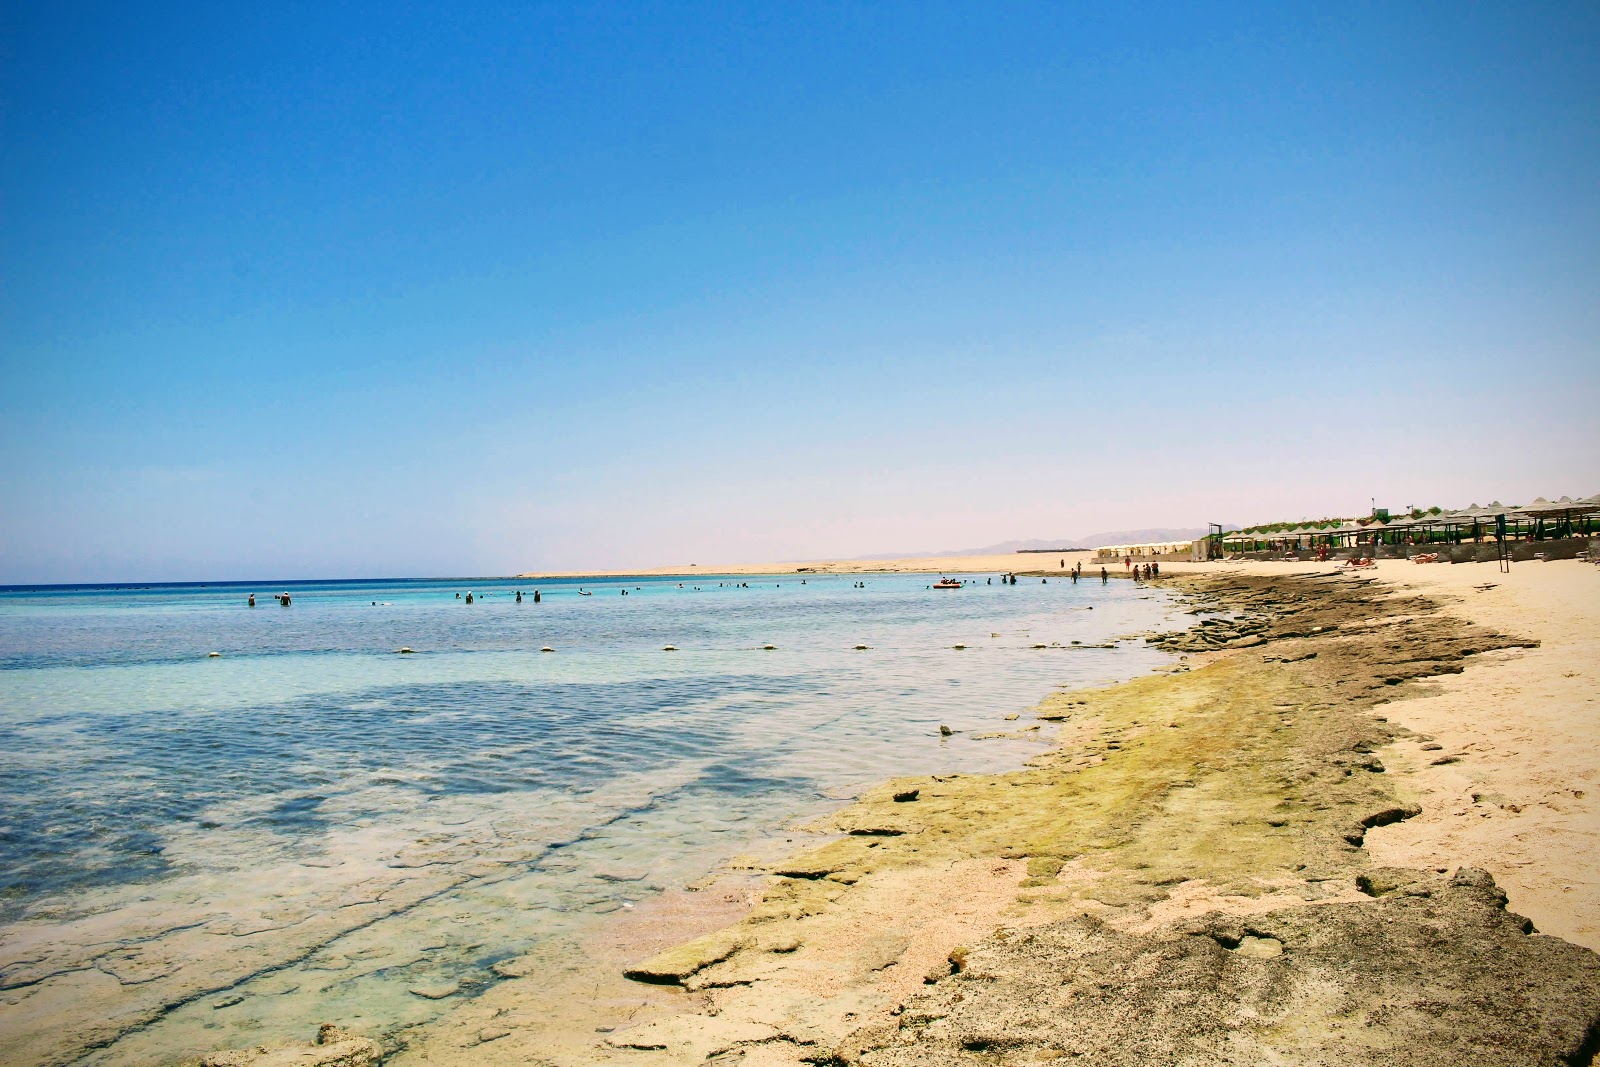 Foto de Fantazia Beach - lugar popular entre os apreciadores de relaxamento